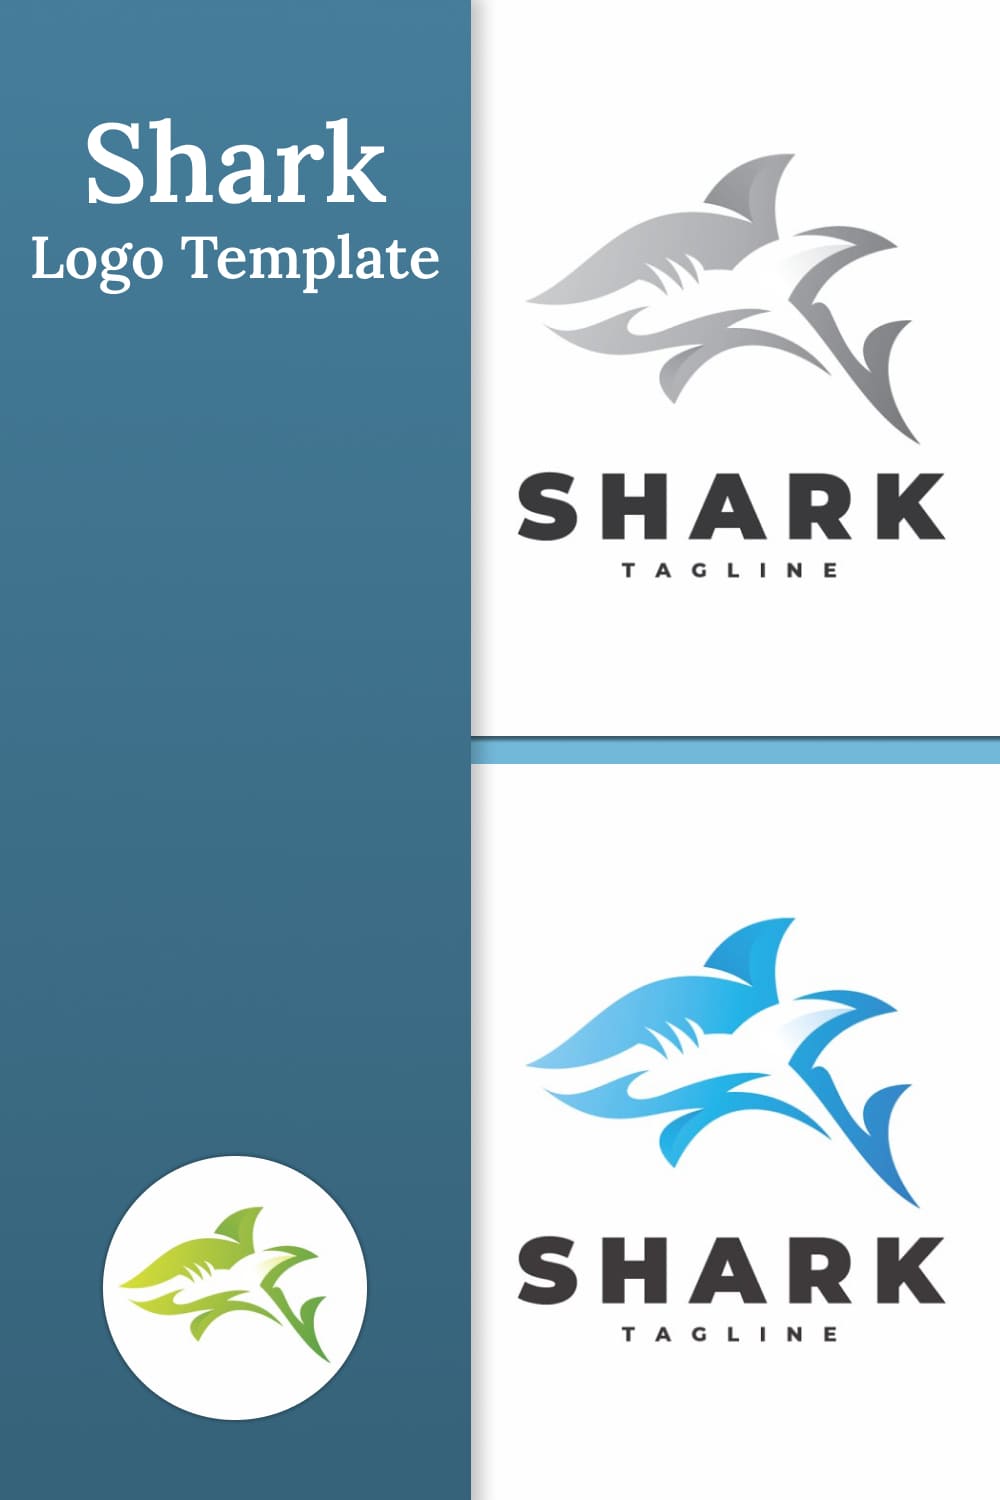 Shark logo template - pinterest image preview.